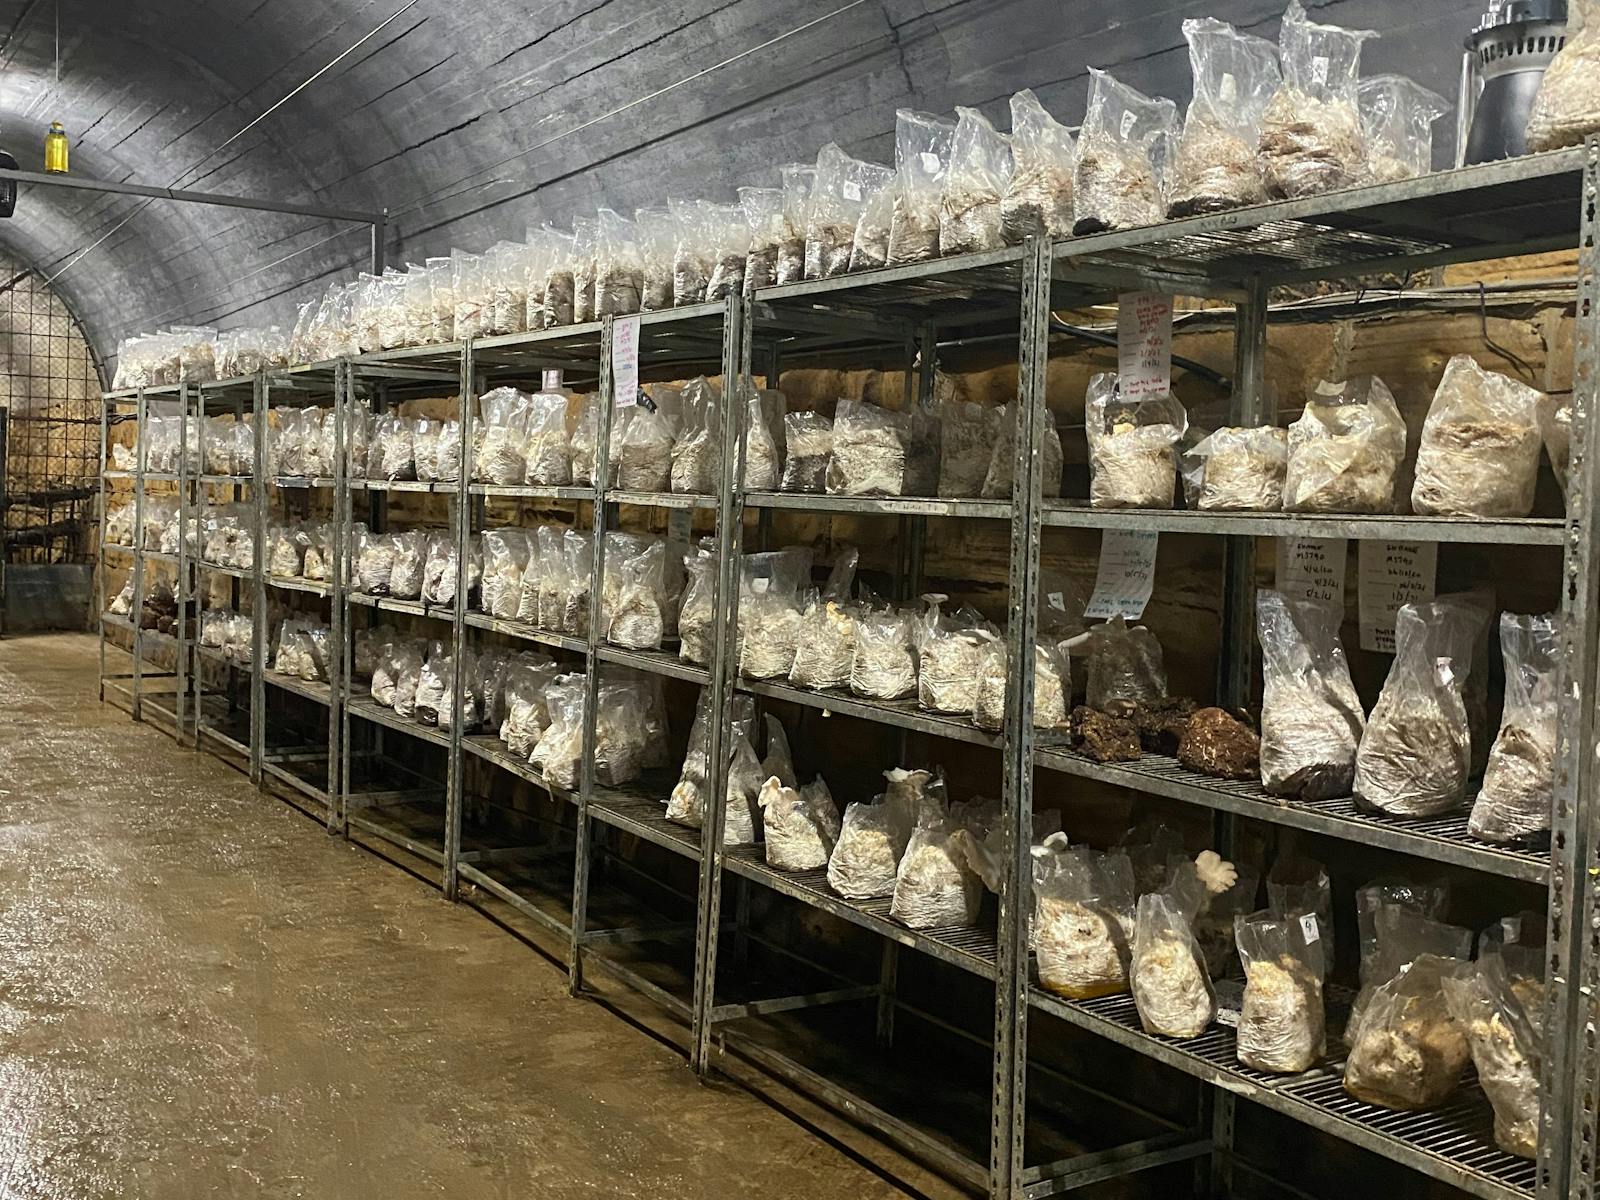 Mushroom racks in the tunnel